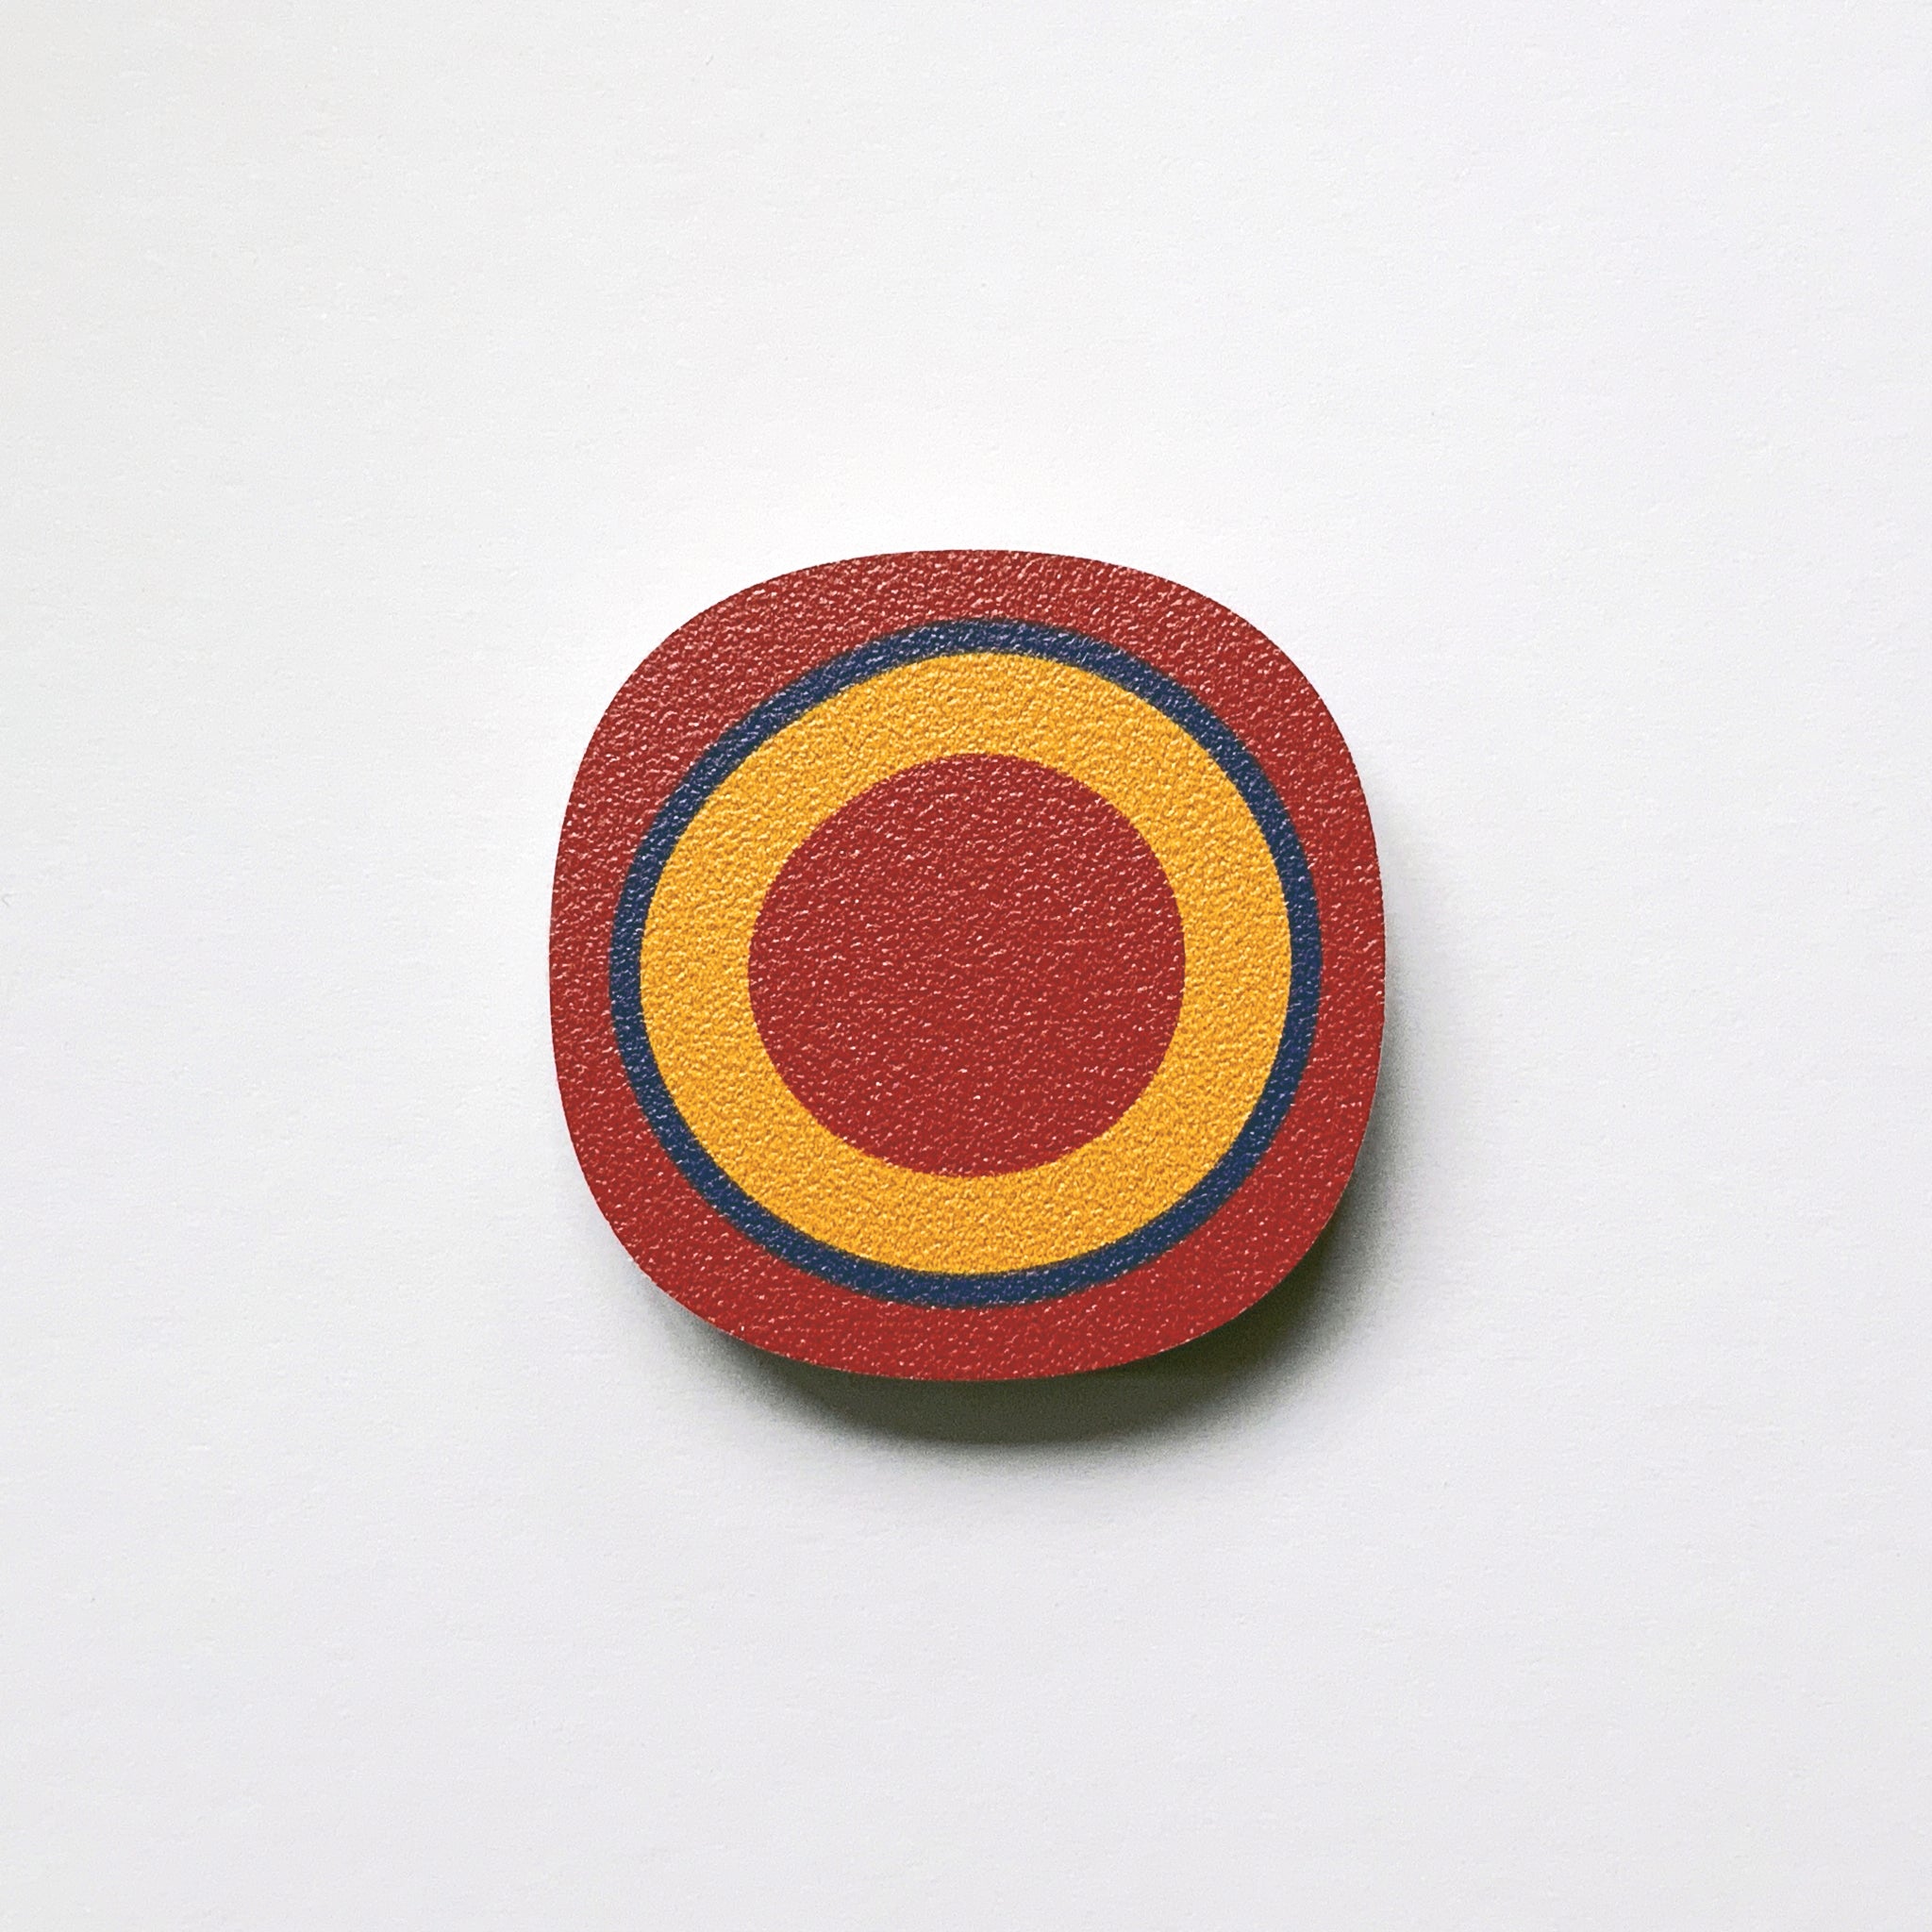 A red circle millefiori design plywood fridge magnet by Beyond the Fridge